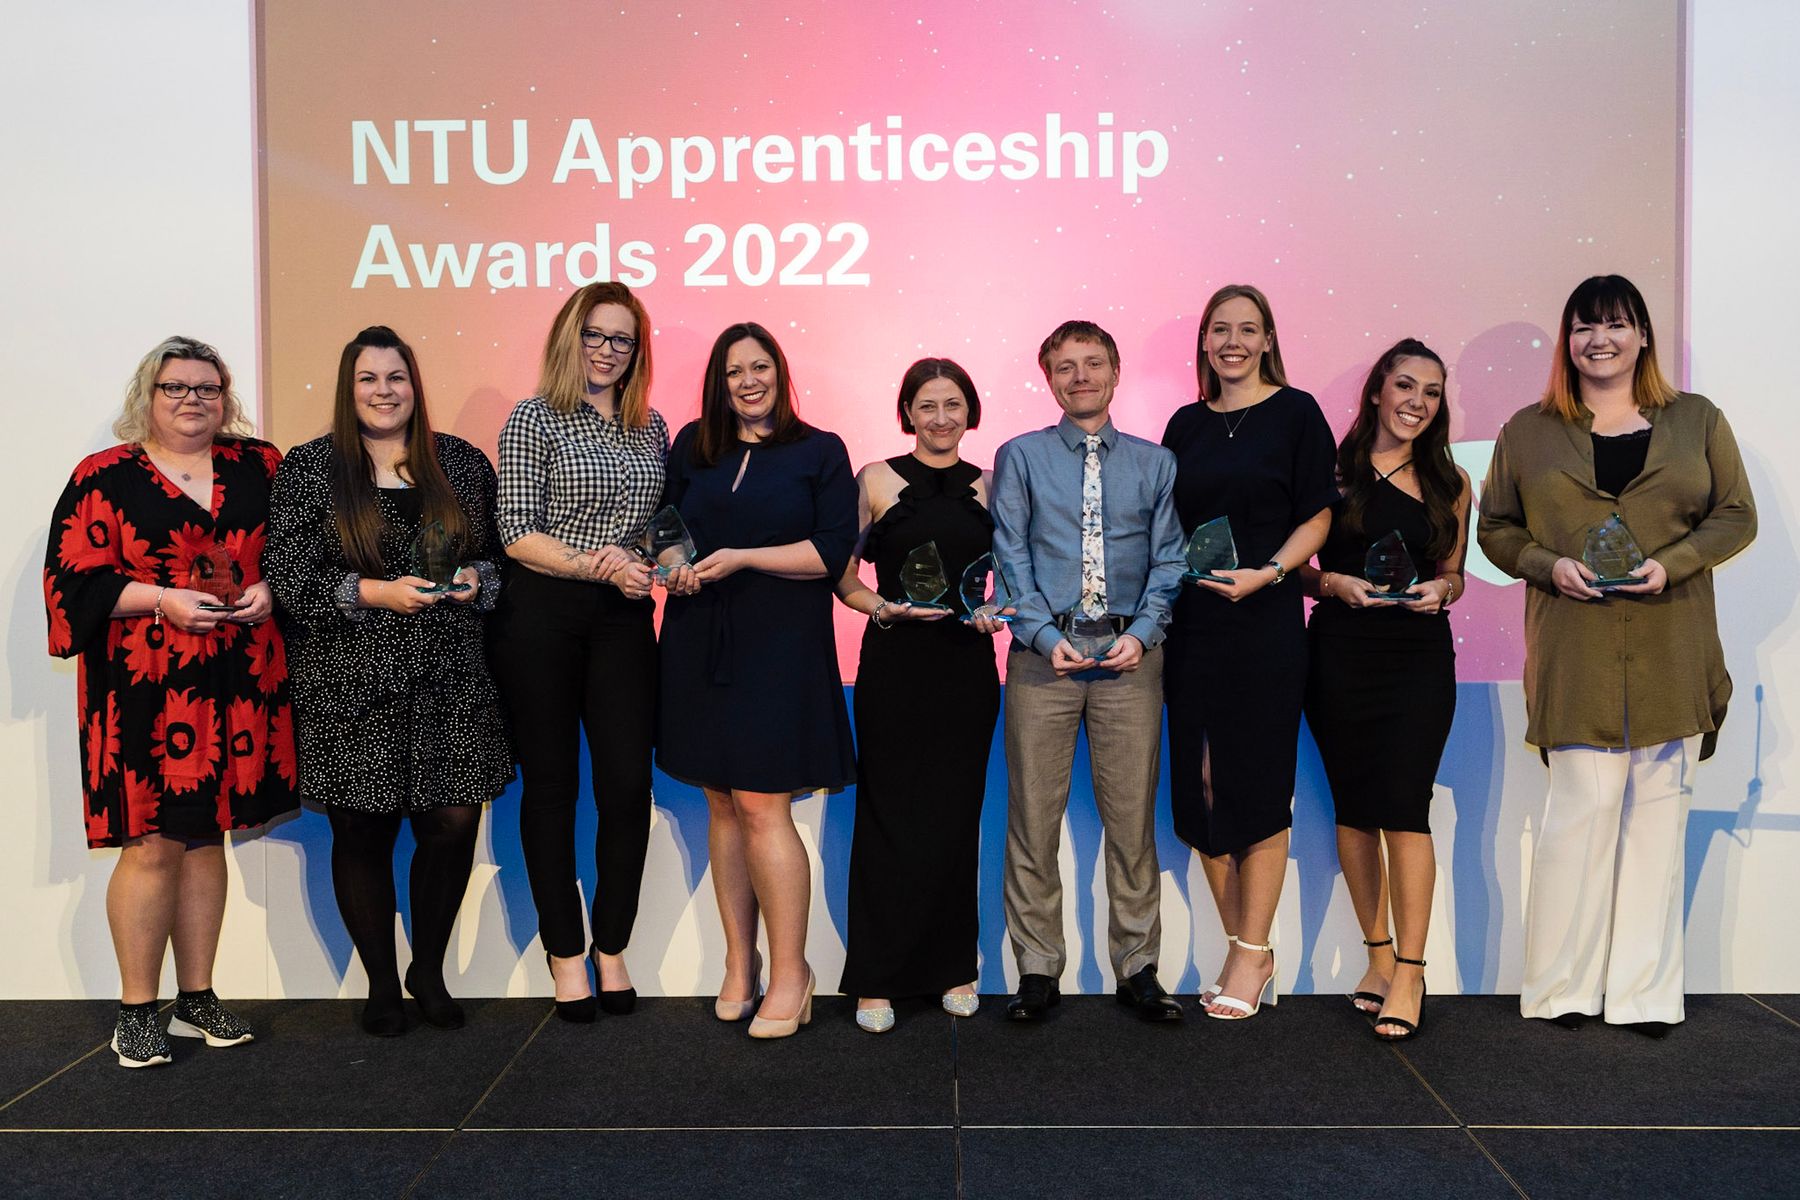 NTU Apprenticeship Awards 2022